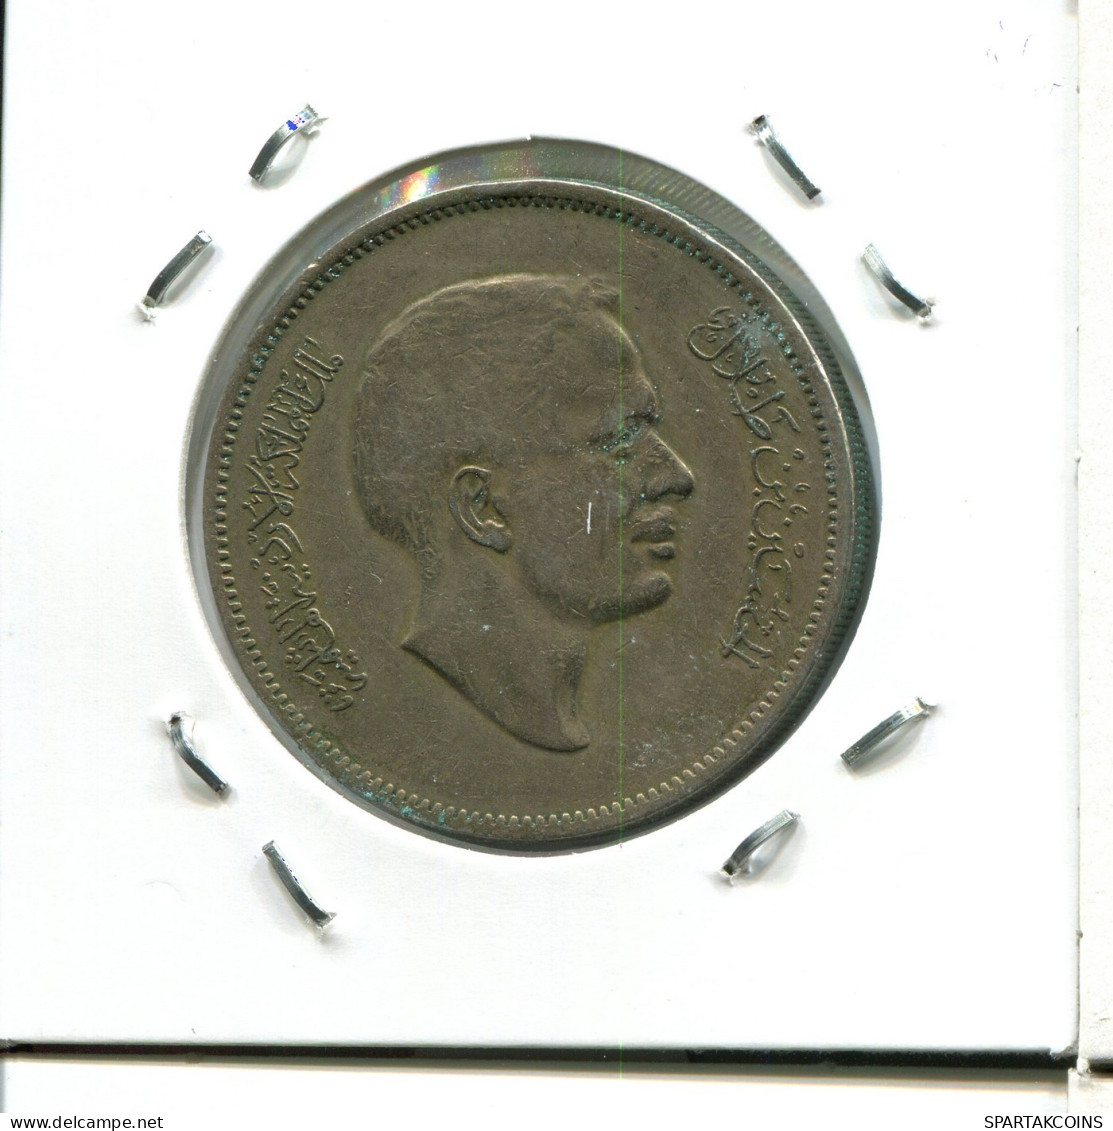 100 FILS 1977 JORDAN Islamisch Münze #AW768.D.A - Giordania